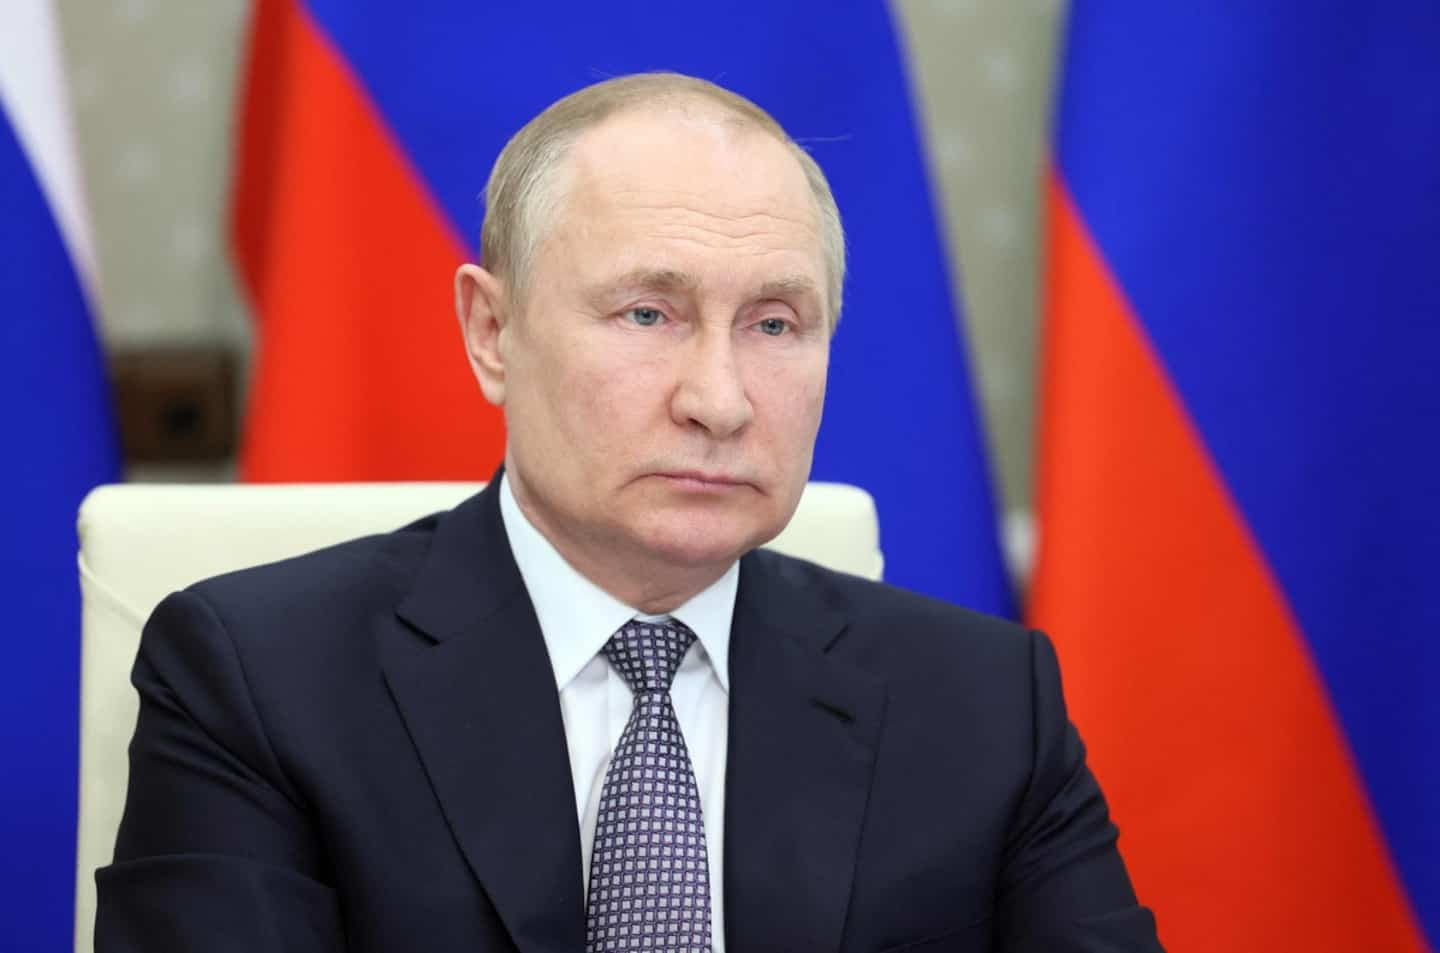 Putin: 'No winners in a nuclear war'